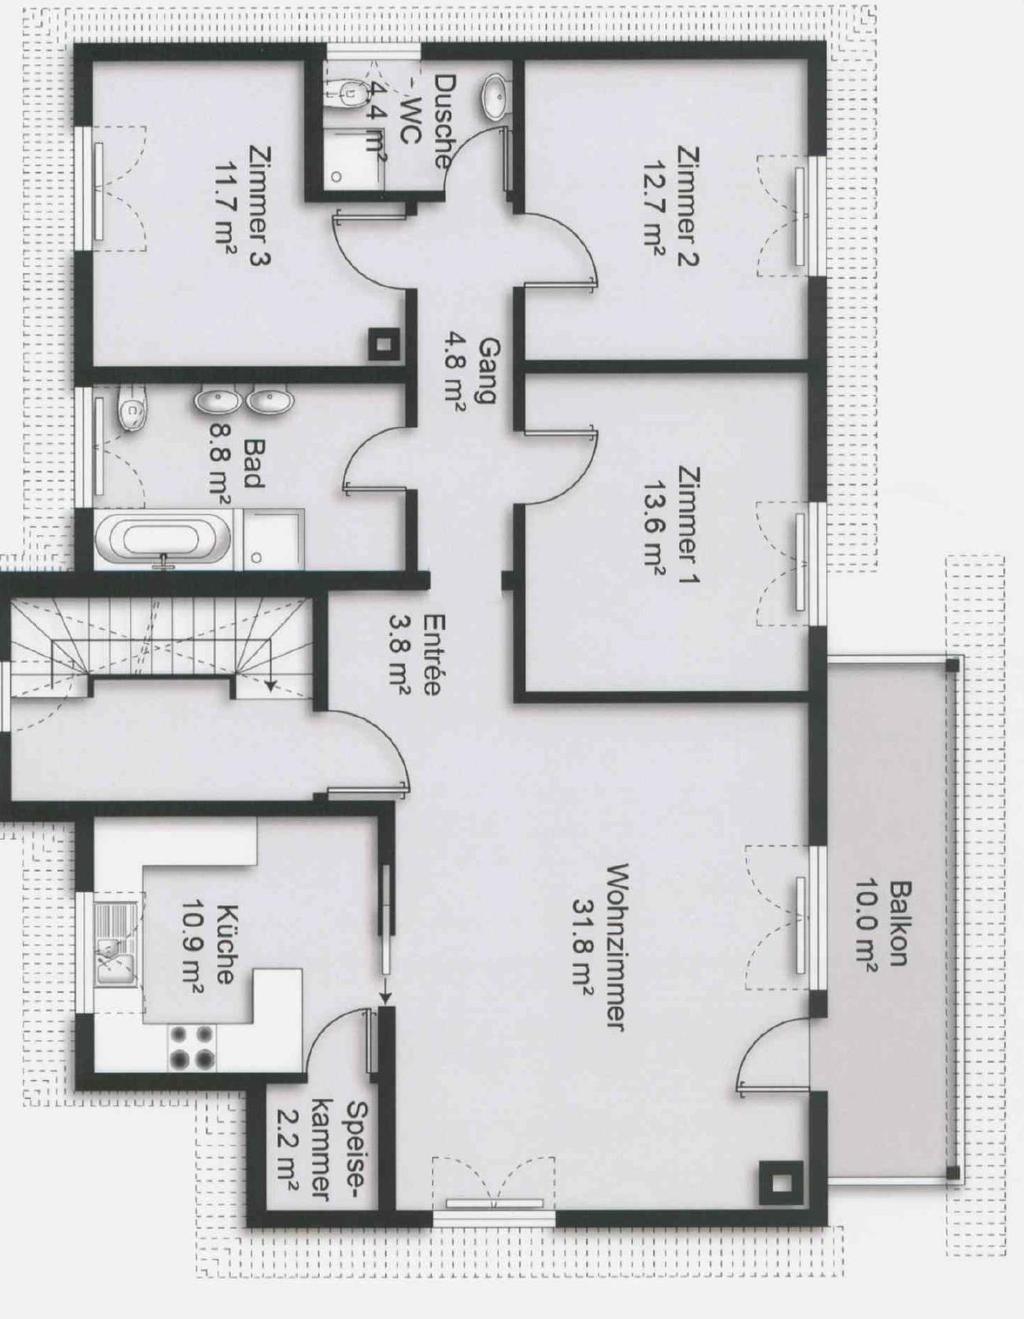 8 m² Bad / WC / WT 8.8 m² Dusche / WC 4.4 m² Küche 10.